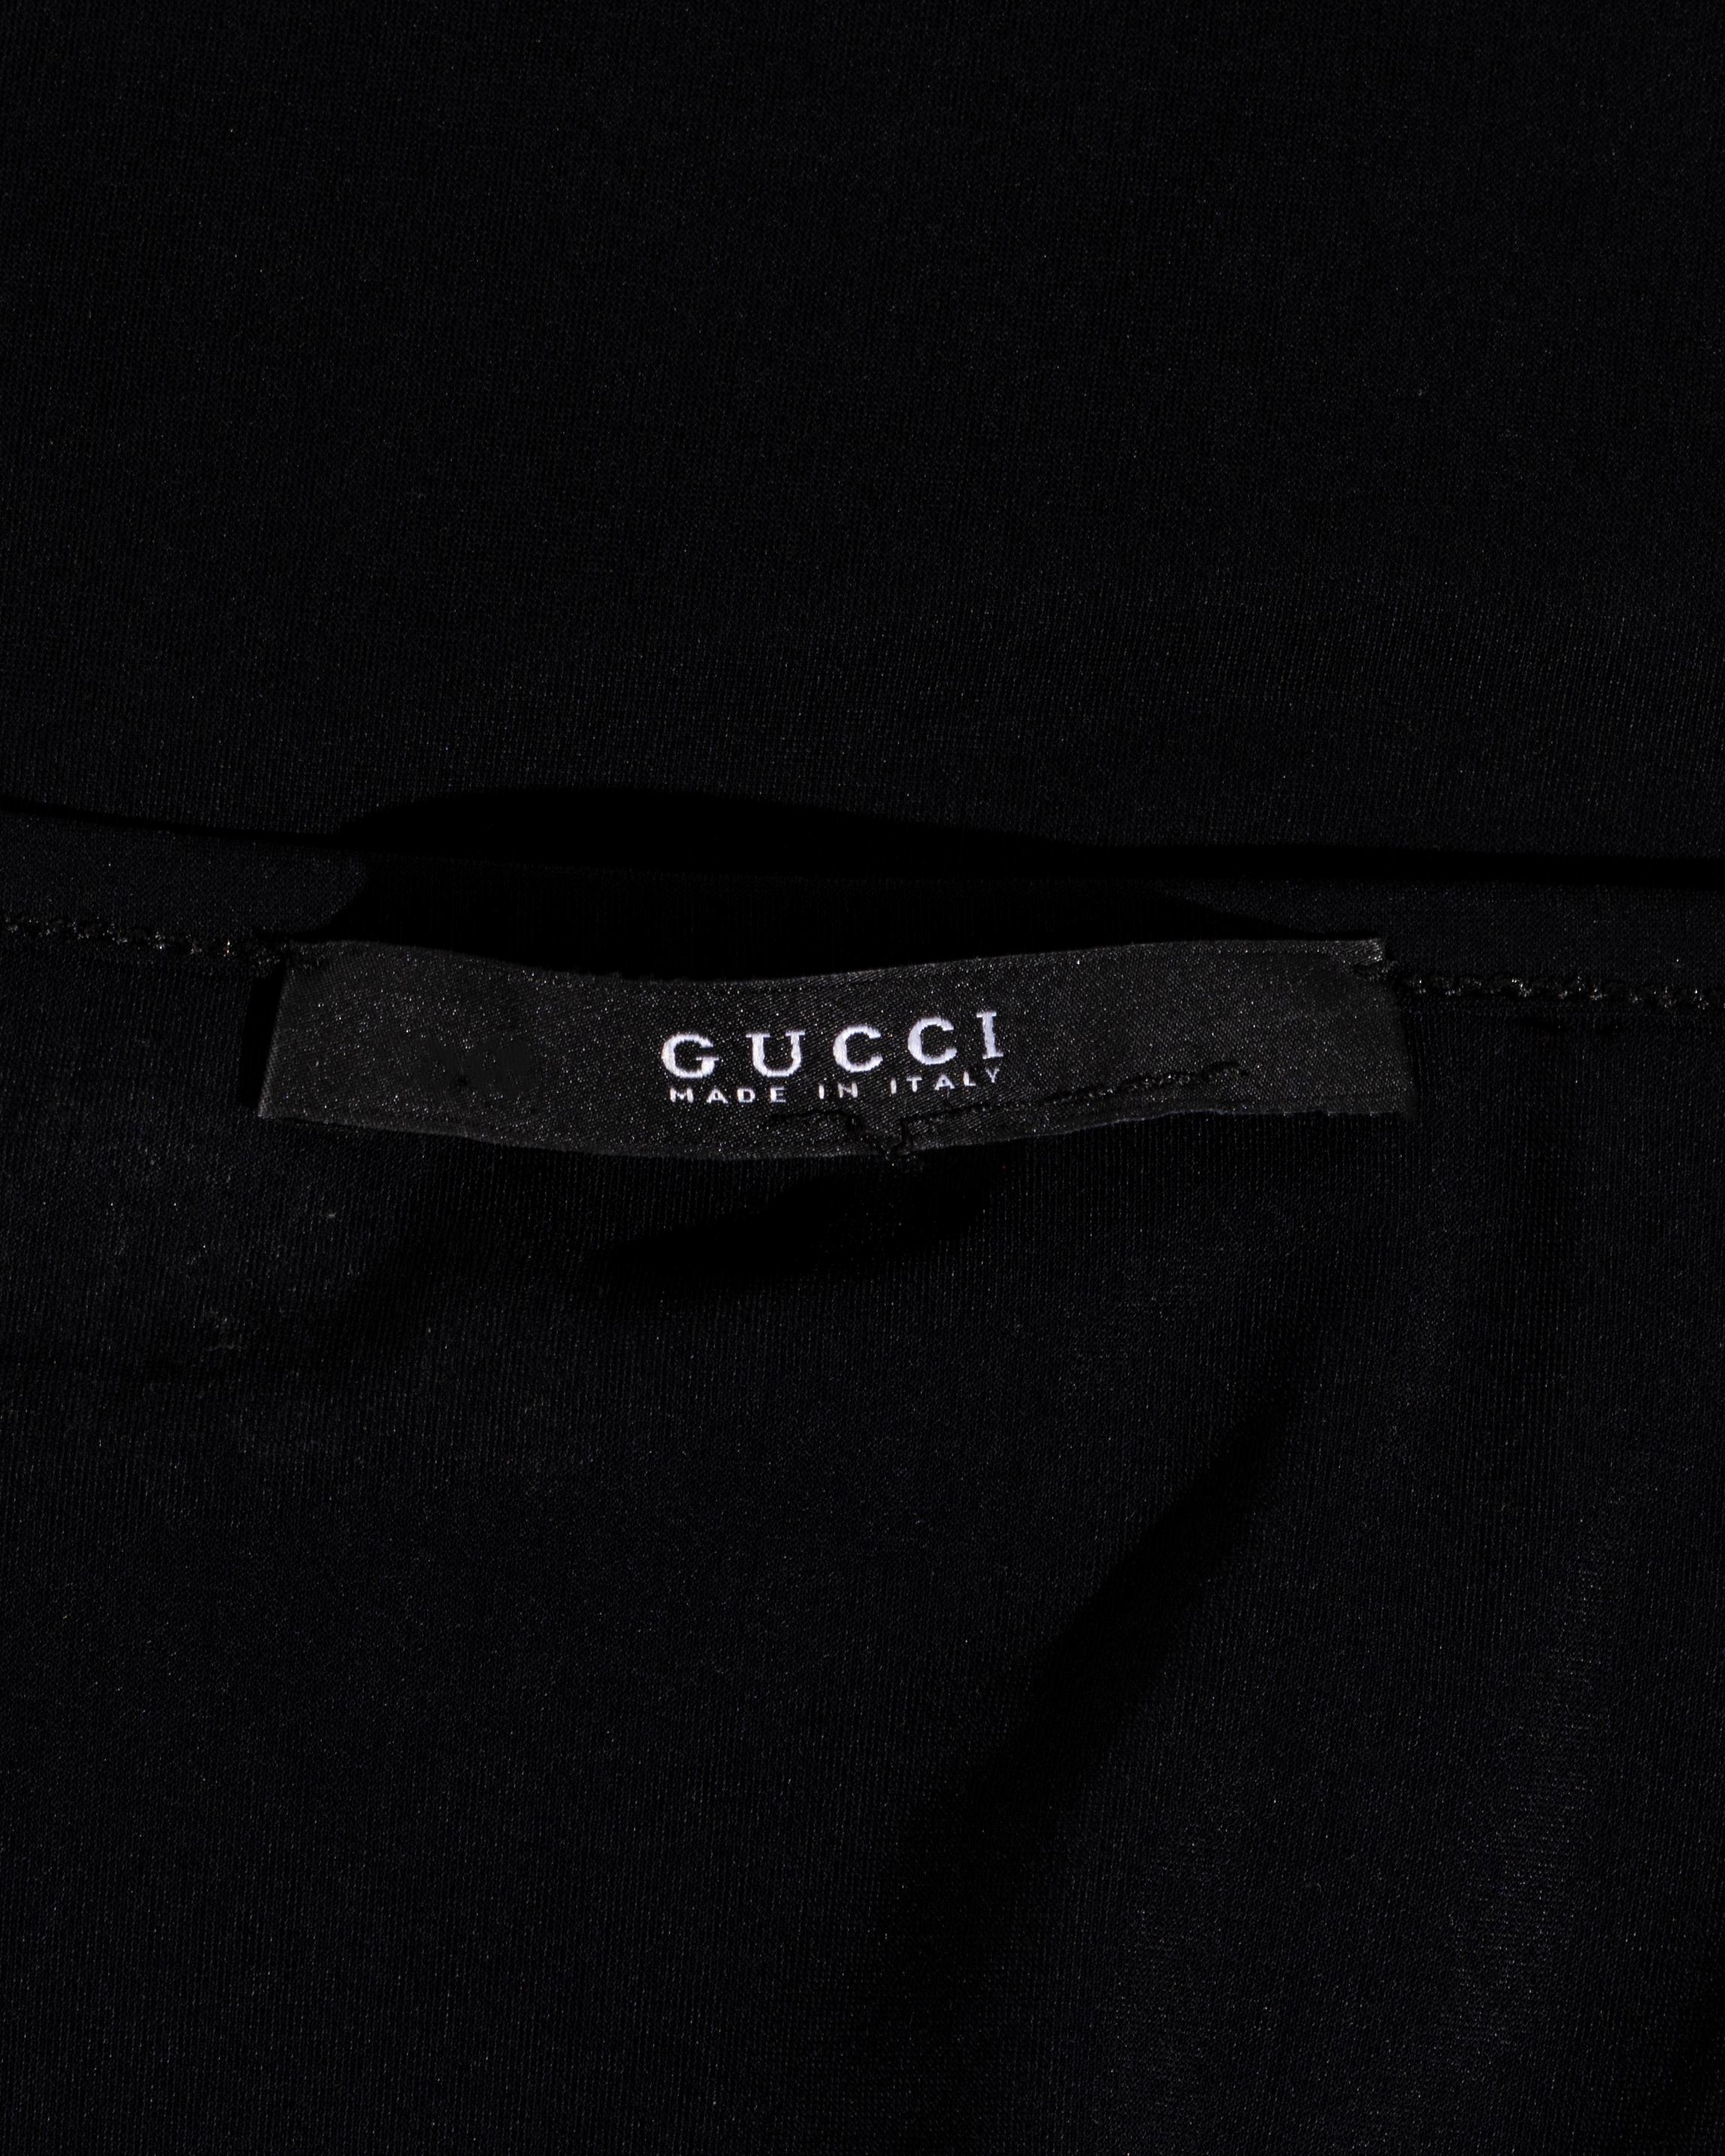 Gucci by Frida Giannini black lycra multi-strapped bodysuit, ss 2010 1